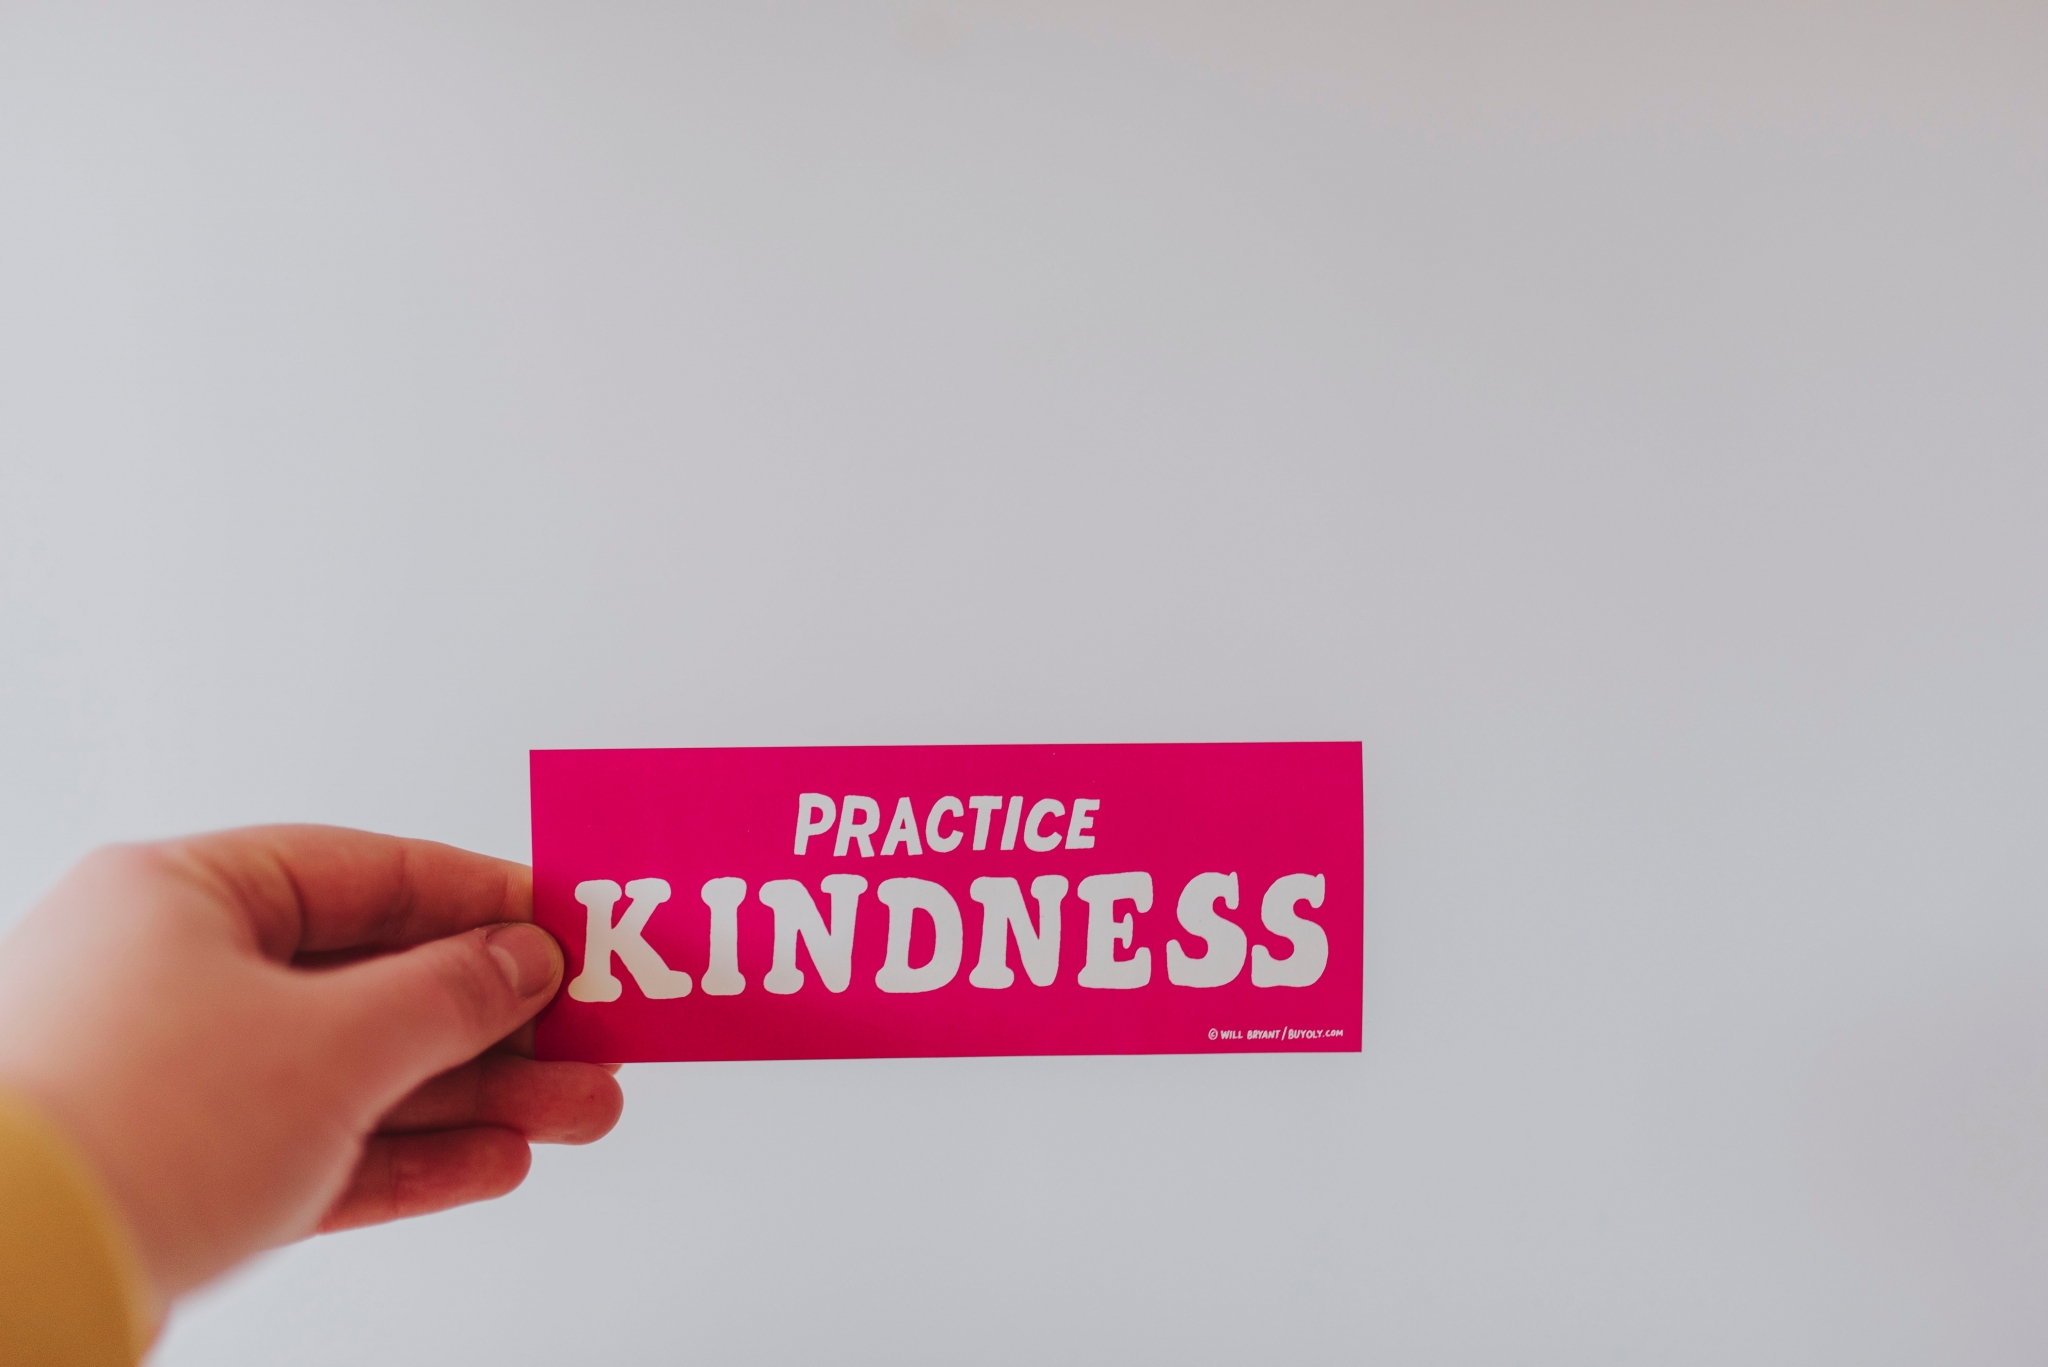 practice kindness